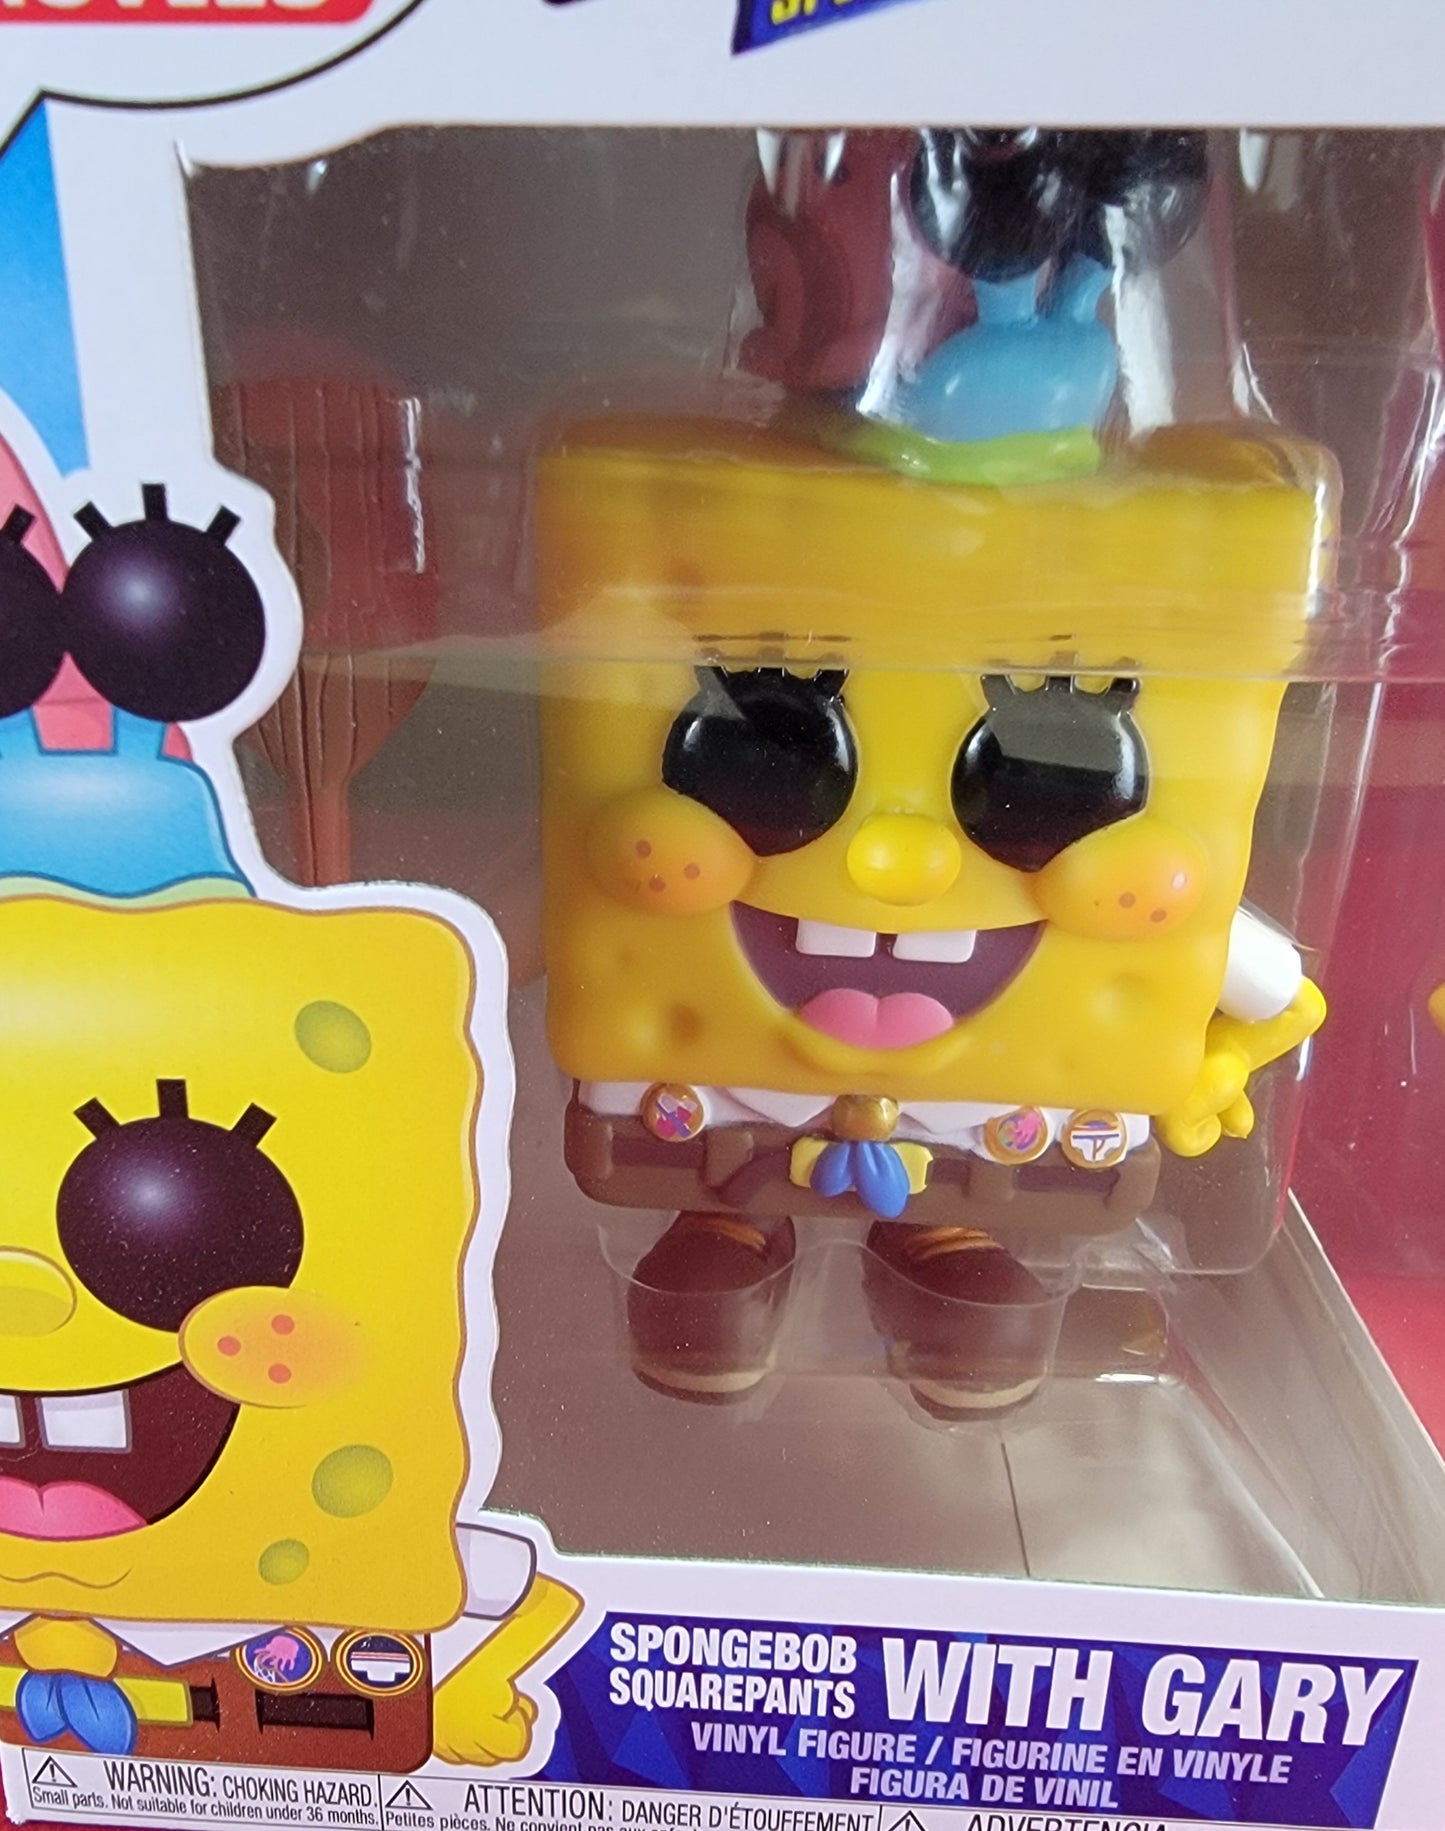 SpongeBob SquarePants with Gary funko # 916 (nib)
With pop protector